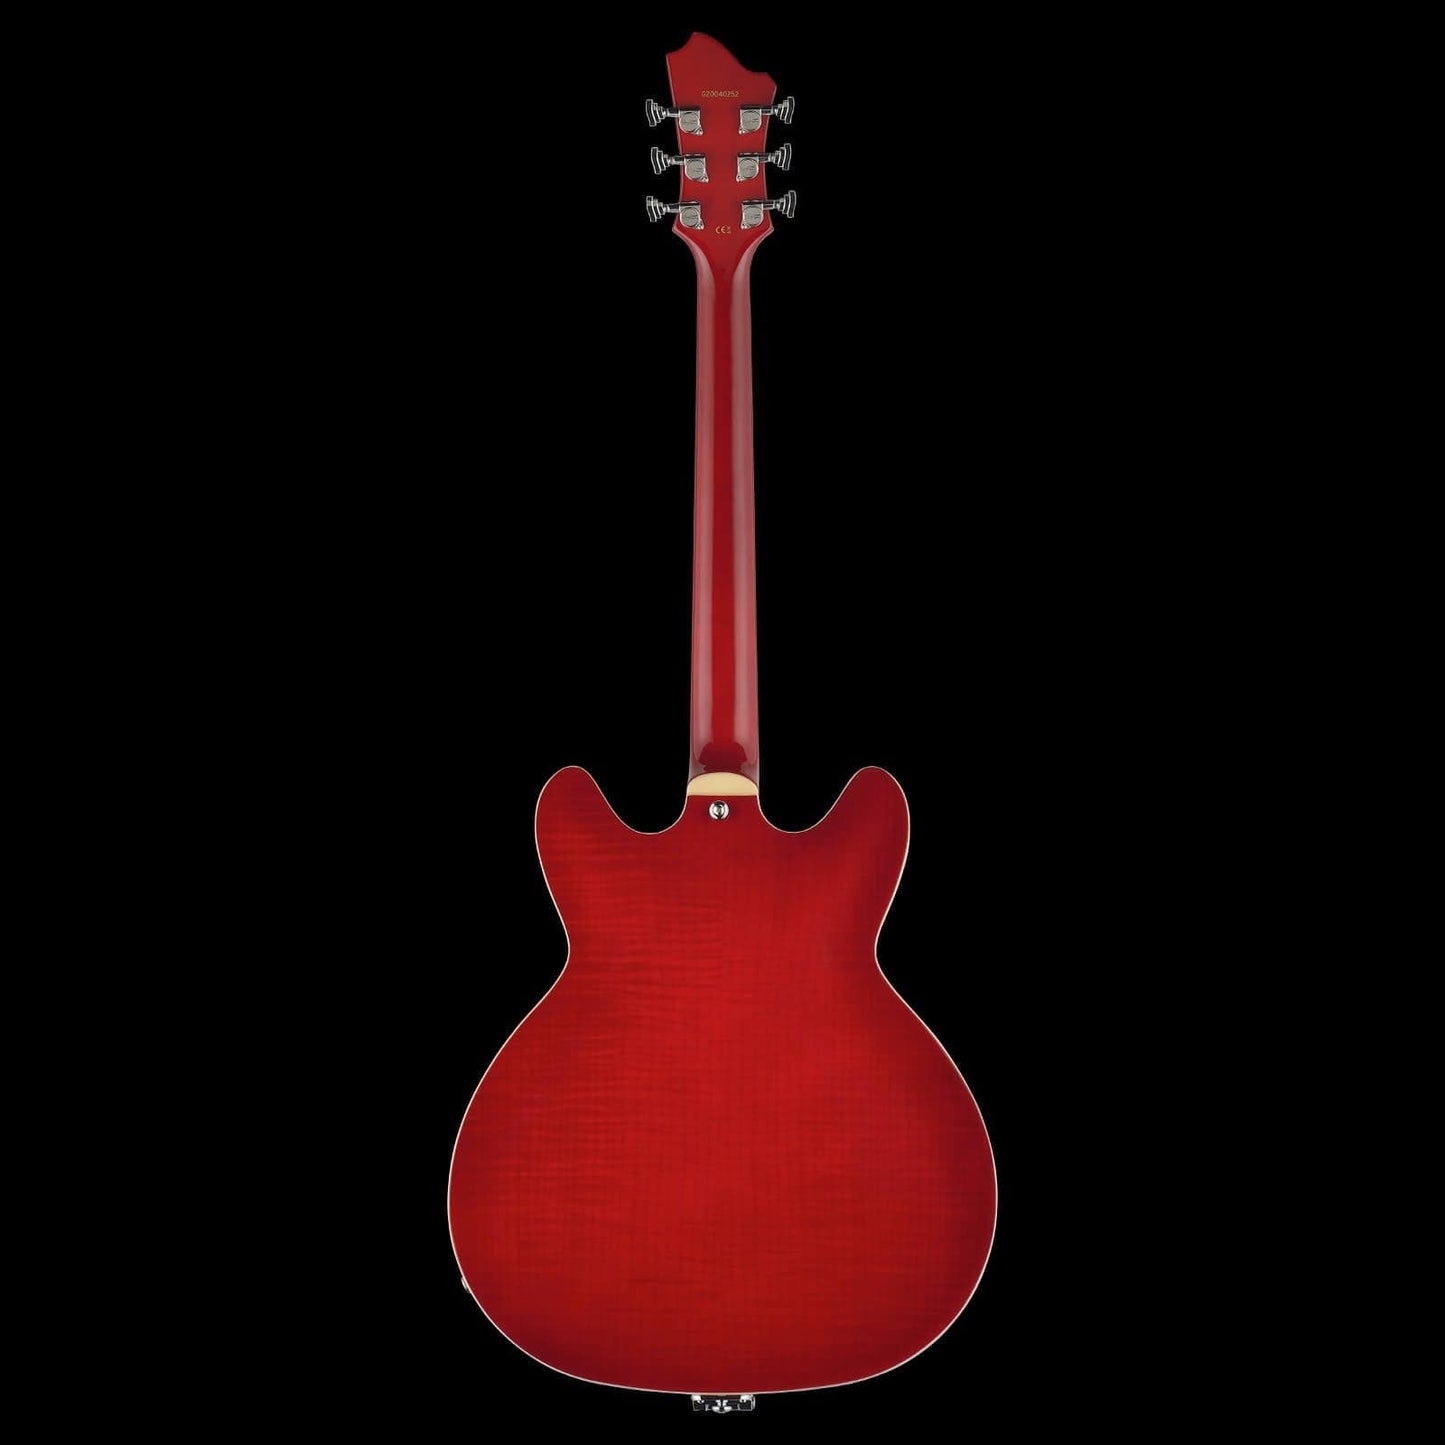 Hagstrom Tremar Viking Deluxe Semi-Hollow Guitar in Wild Cherry Transparent